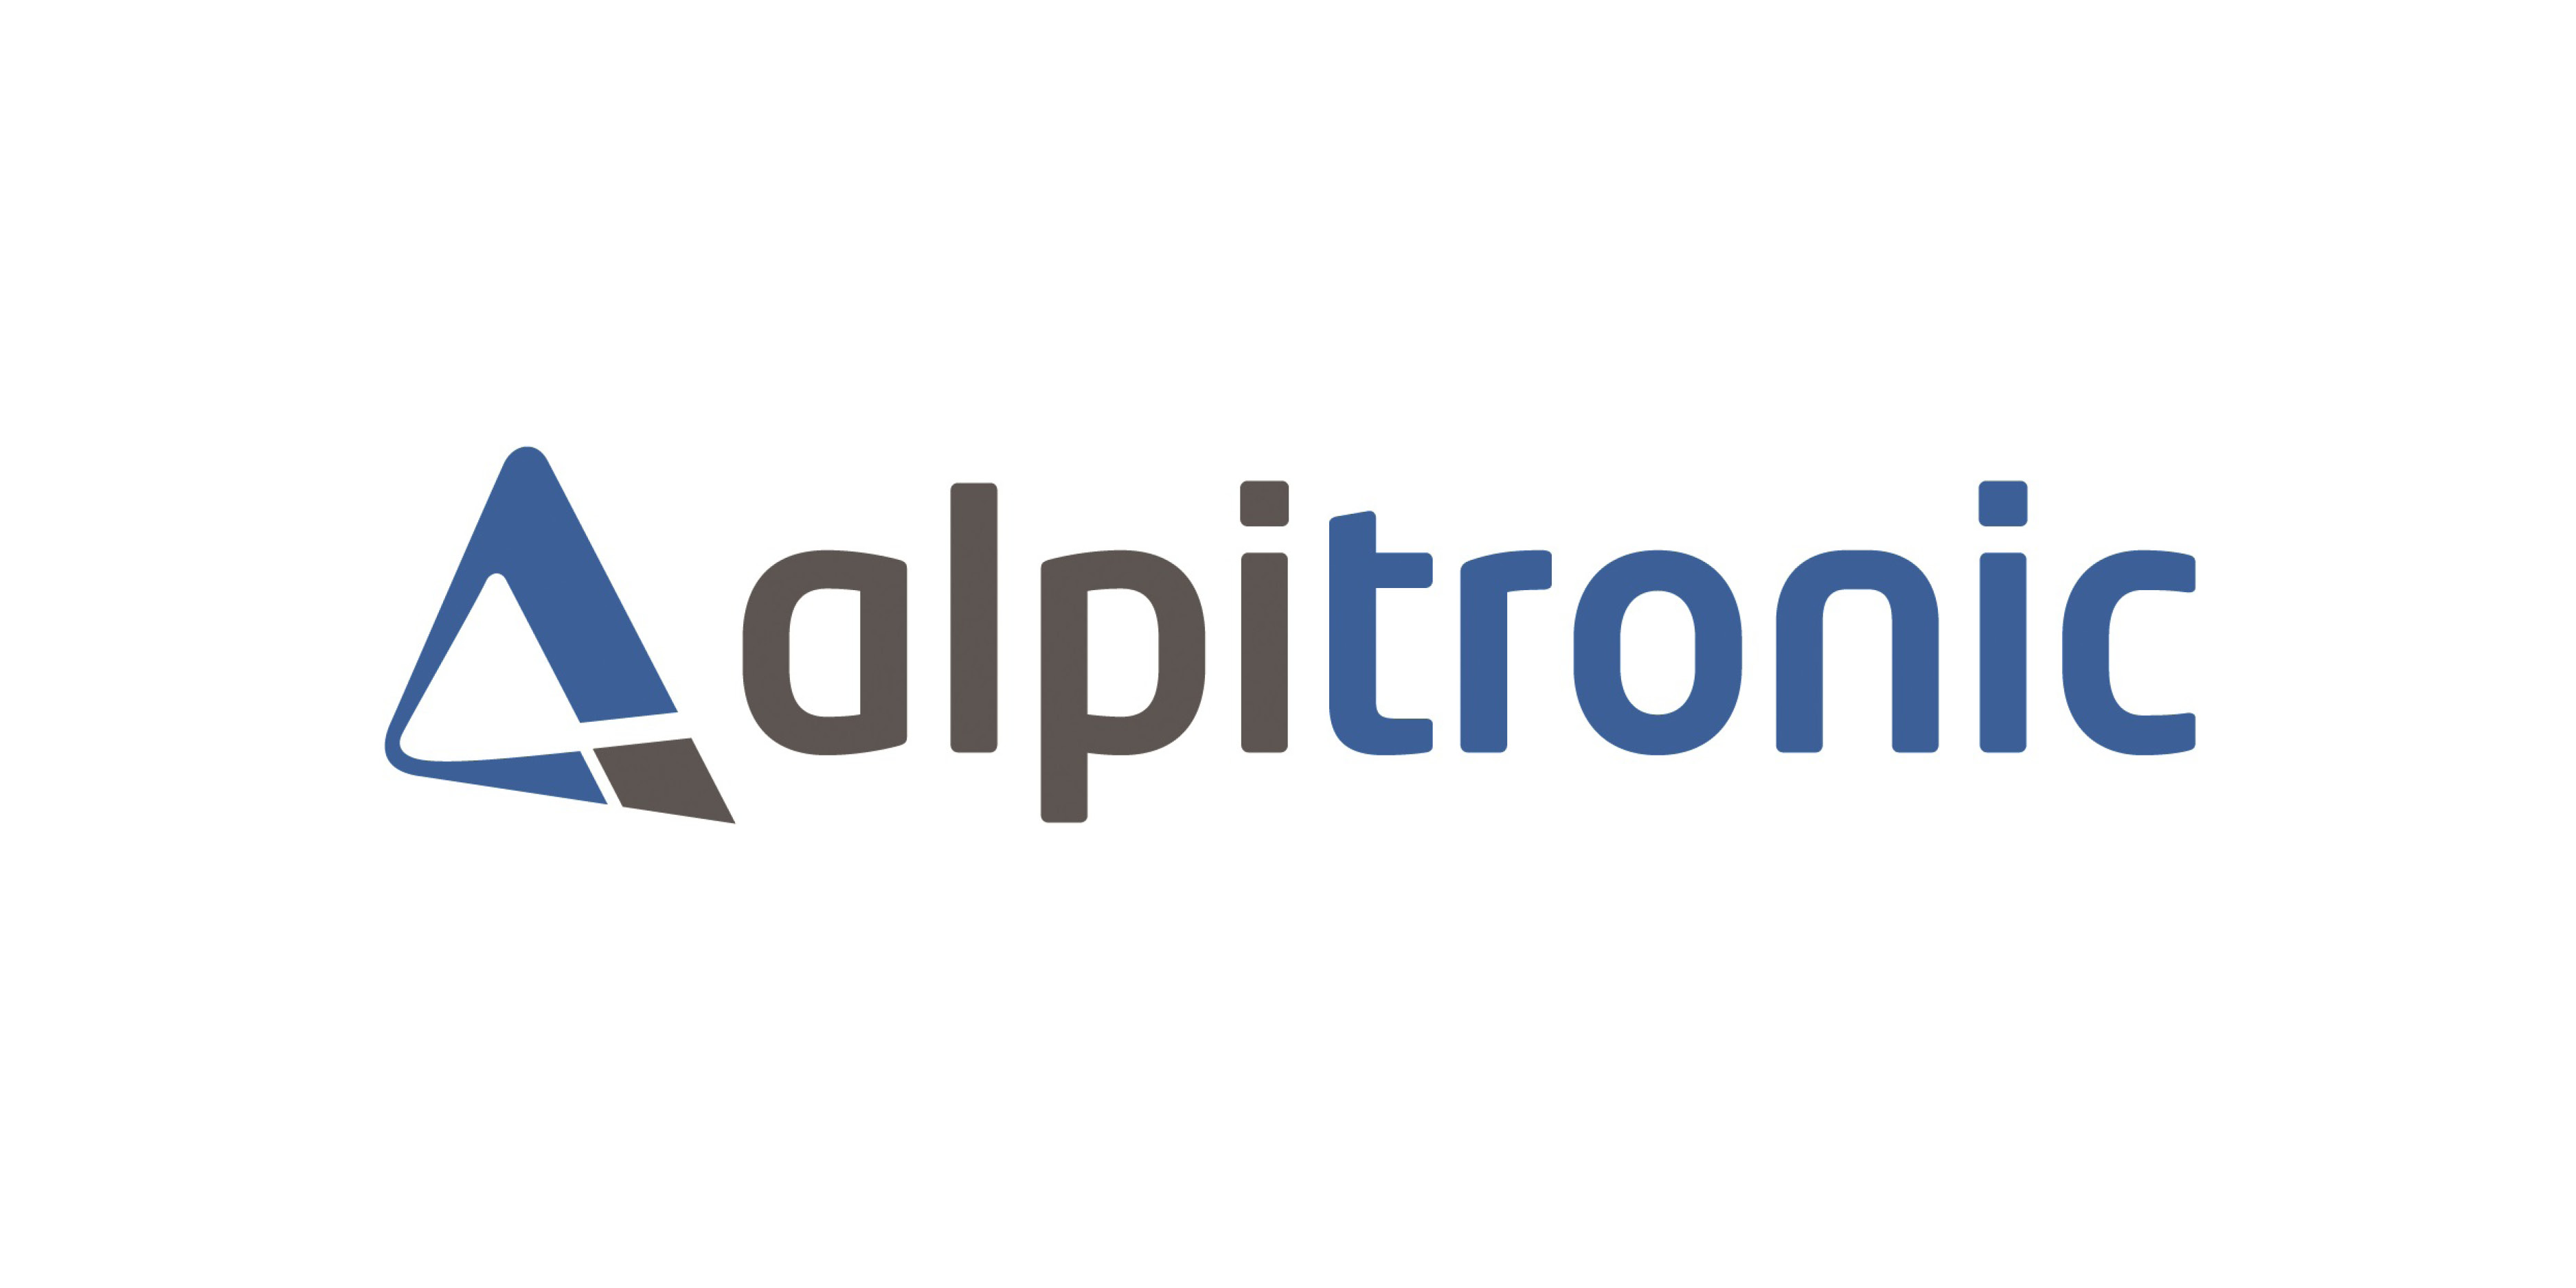 Alpitronic GmbH | srl